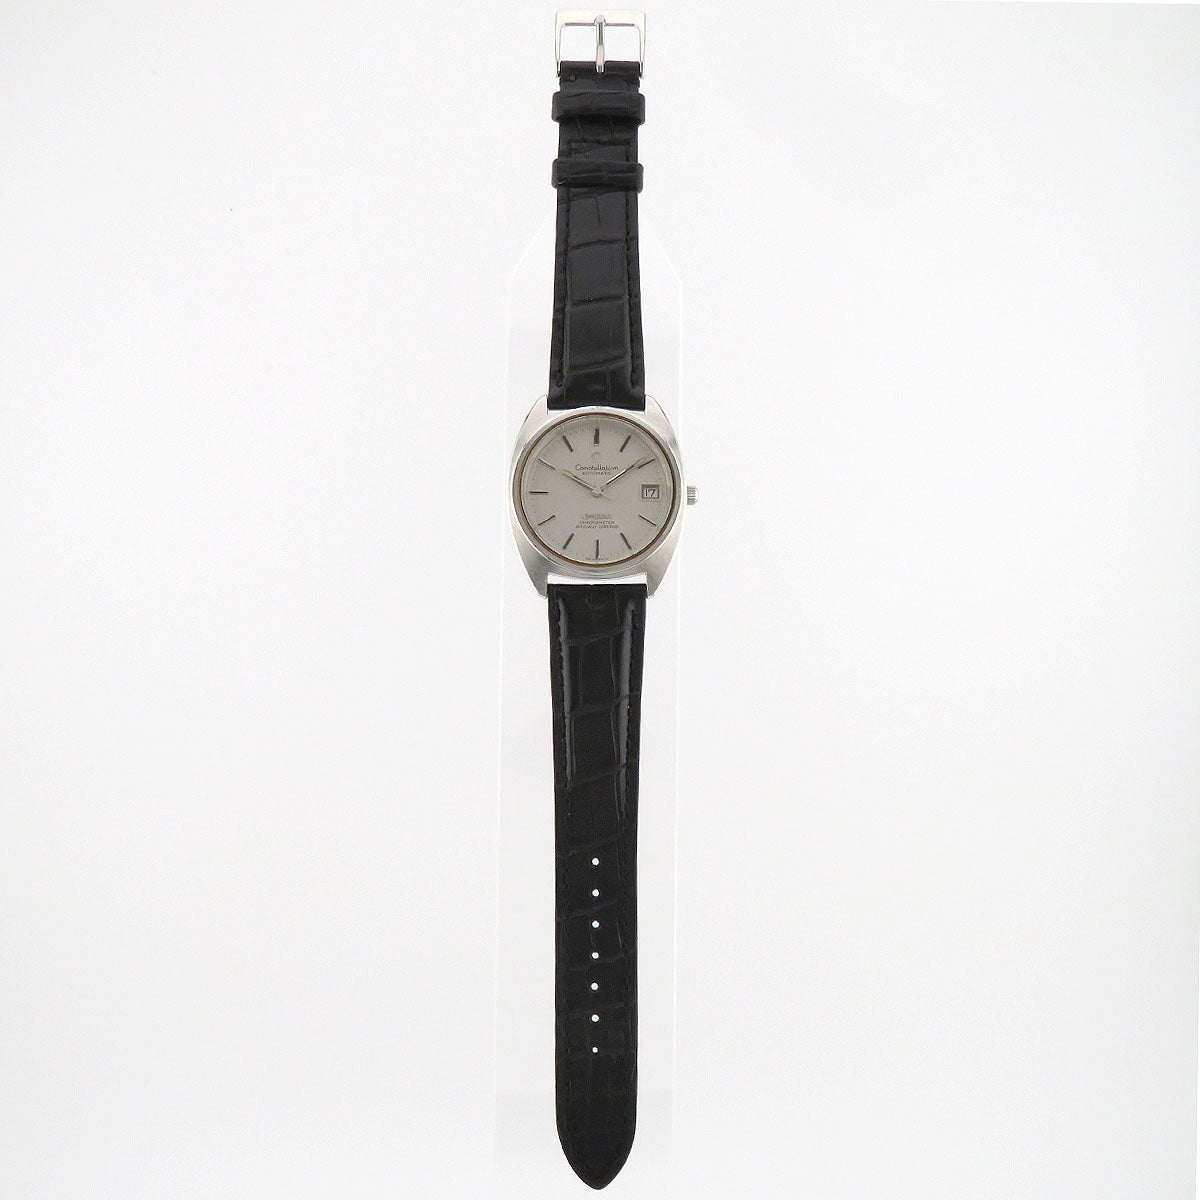 Automatic Constellation Wrist Watch 168.0056